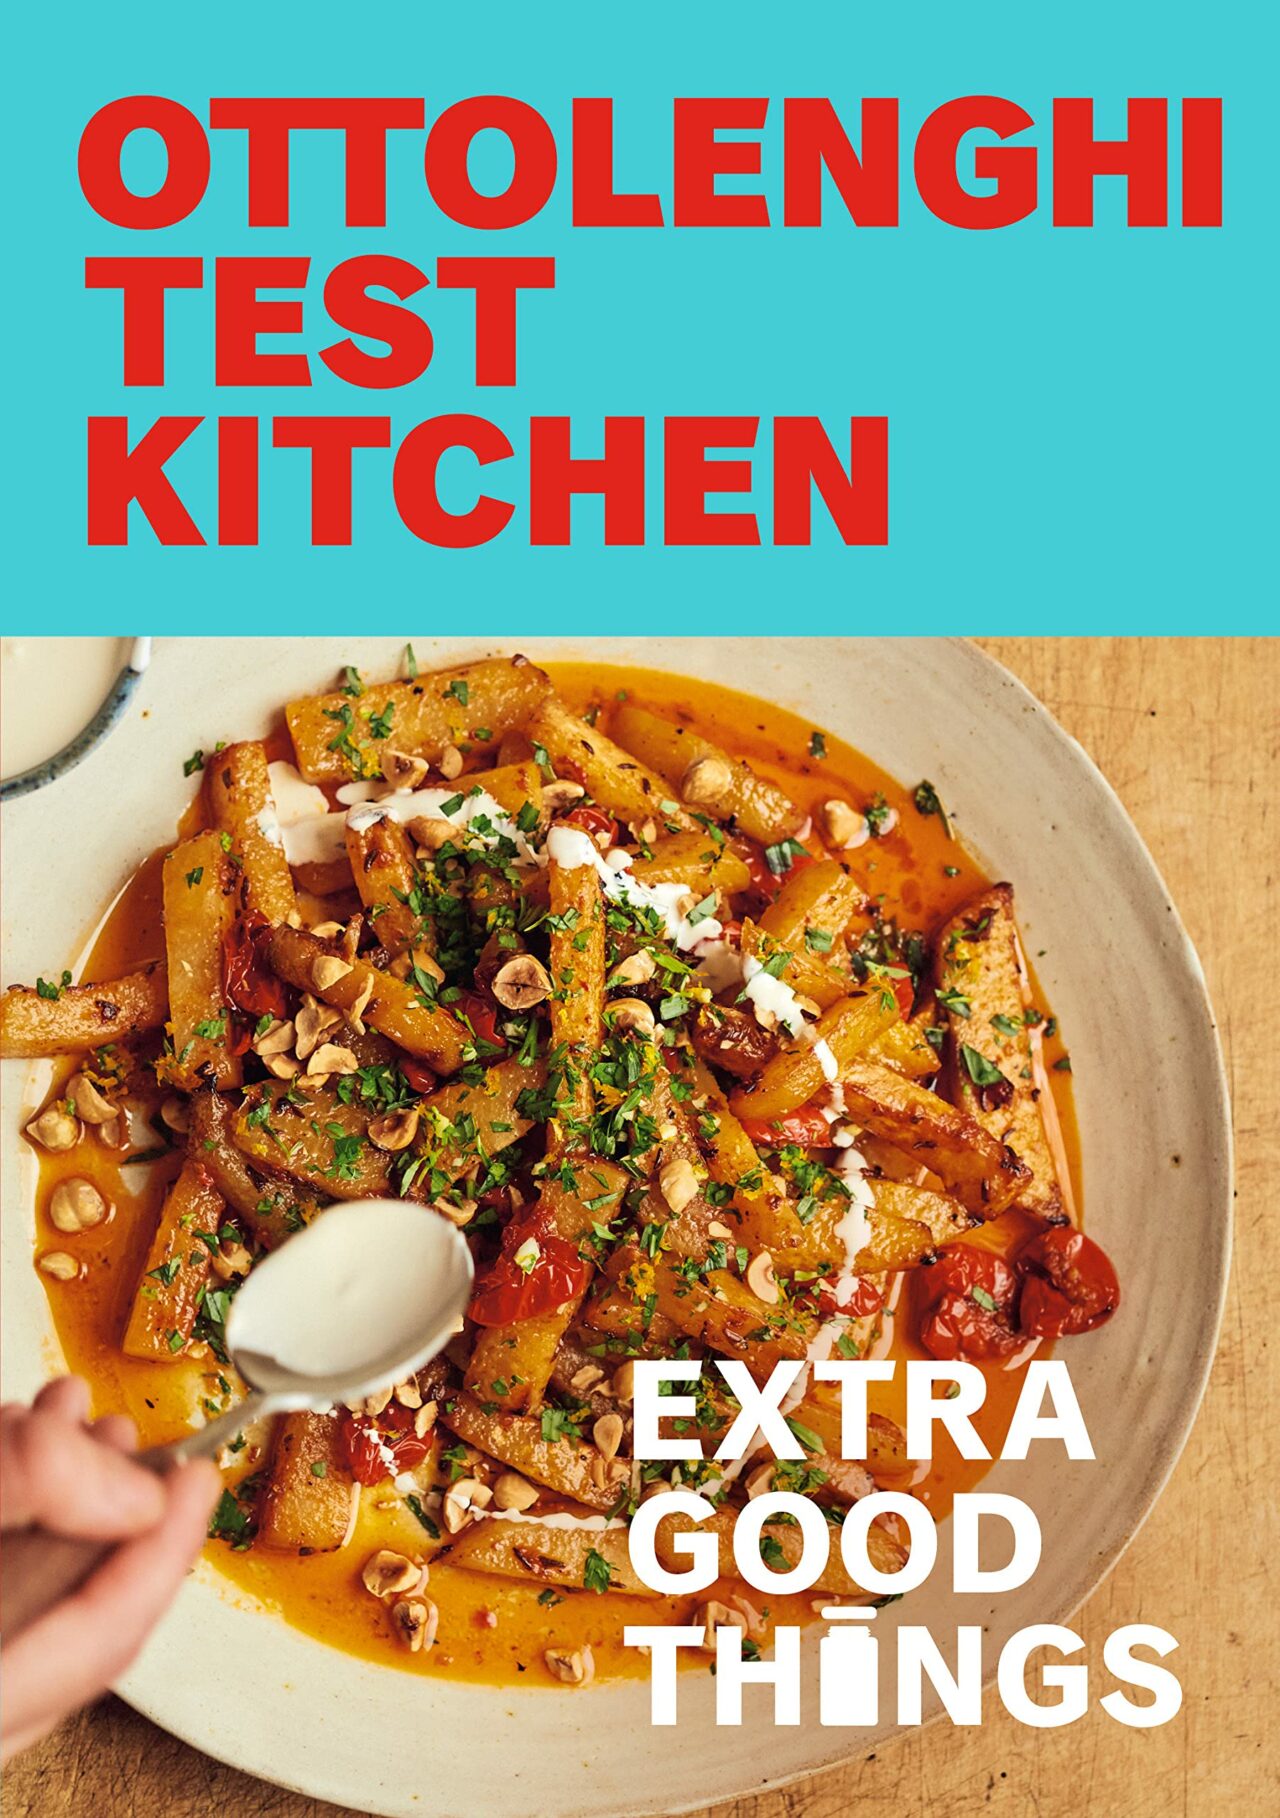 Ottolenghi Test Kitchen - City Book Review